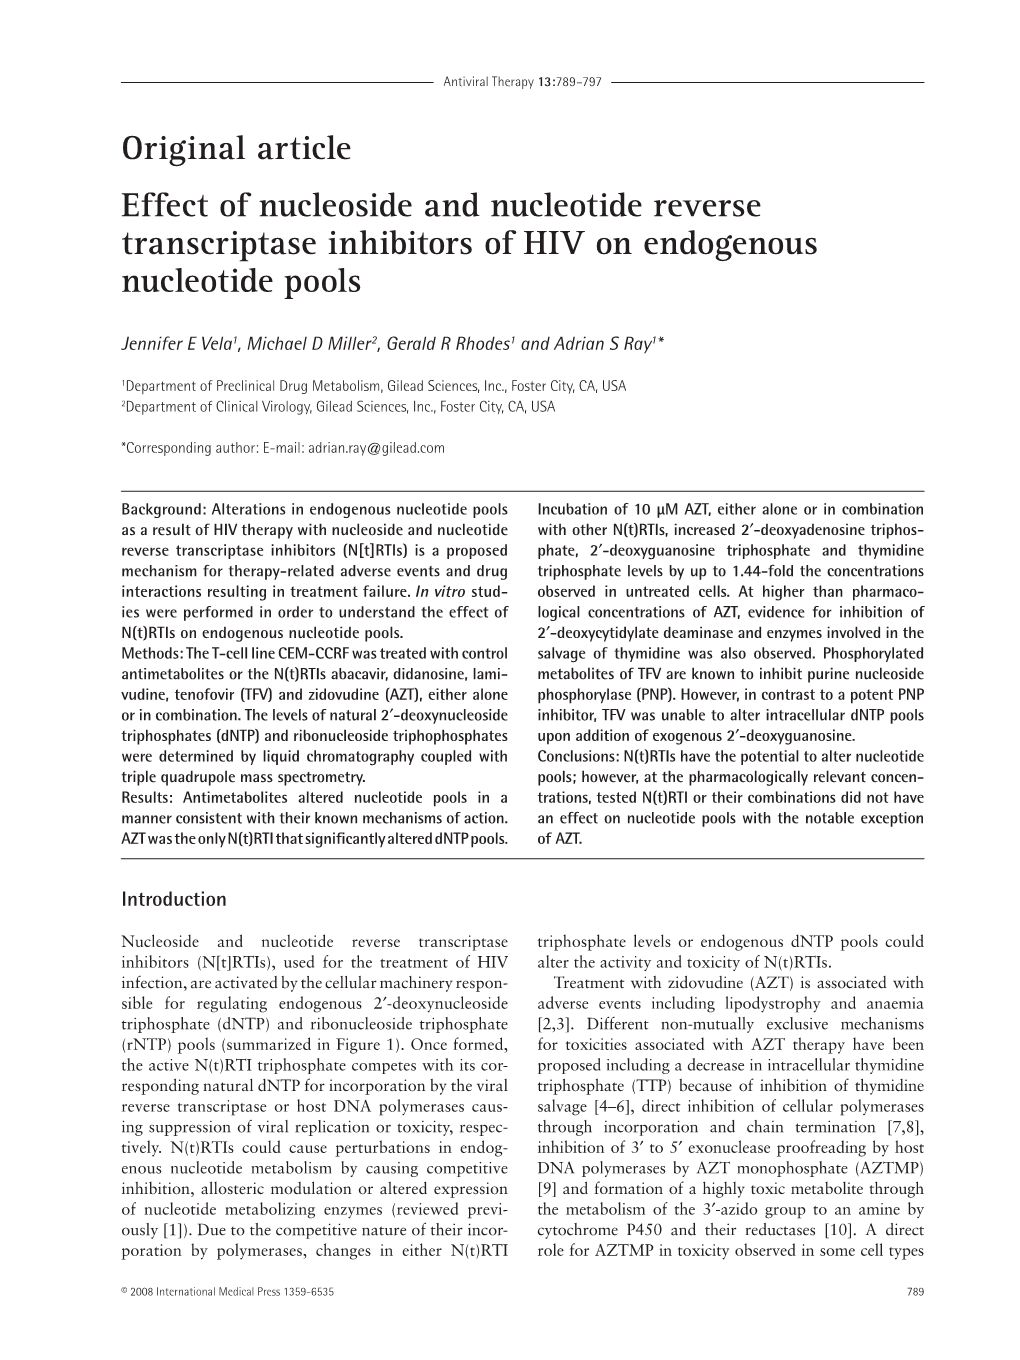 Original Article Effect of Nucleoside and Nucleotide Reverse Transcriptase Inhibitors of HIV on Endogenous Nucleotide Pools